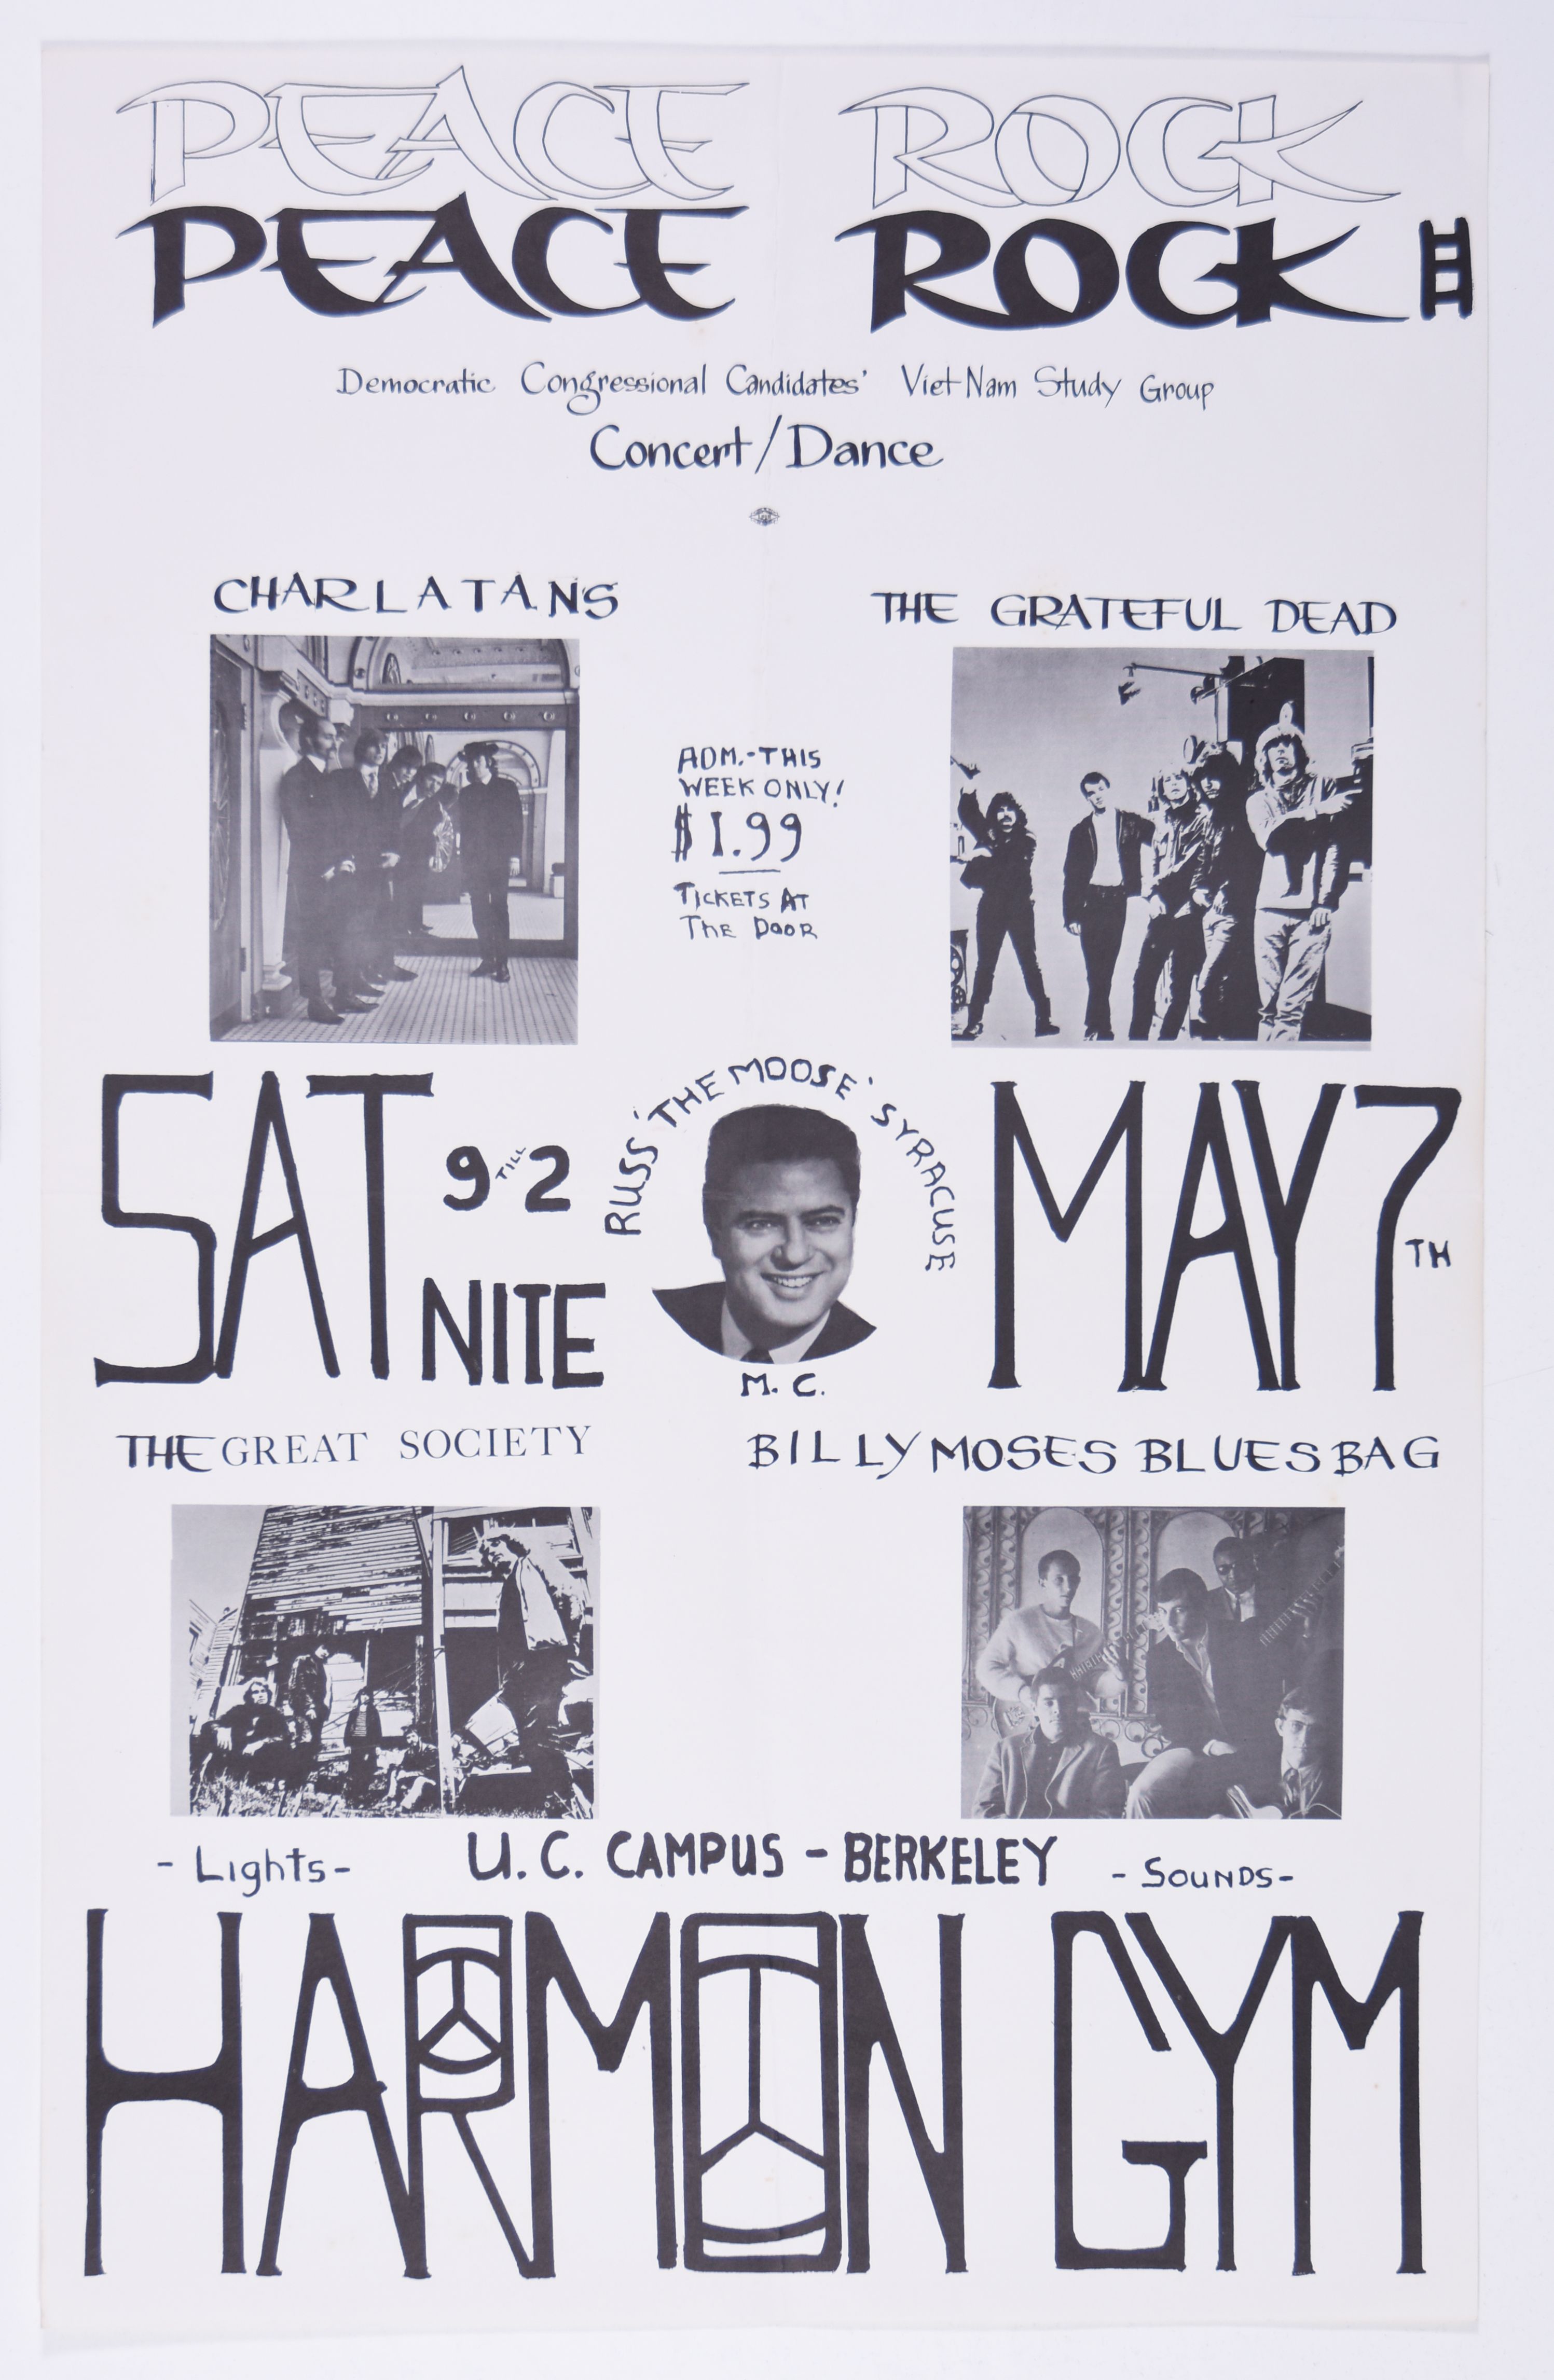 Grateful Dead / Charlatans Peace Rock III 1966 Concert Poster